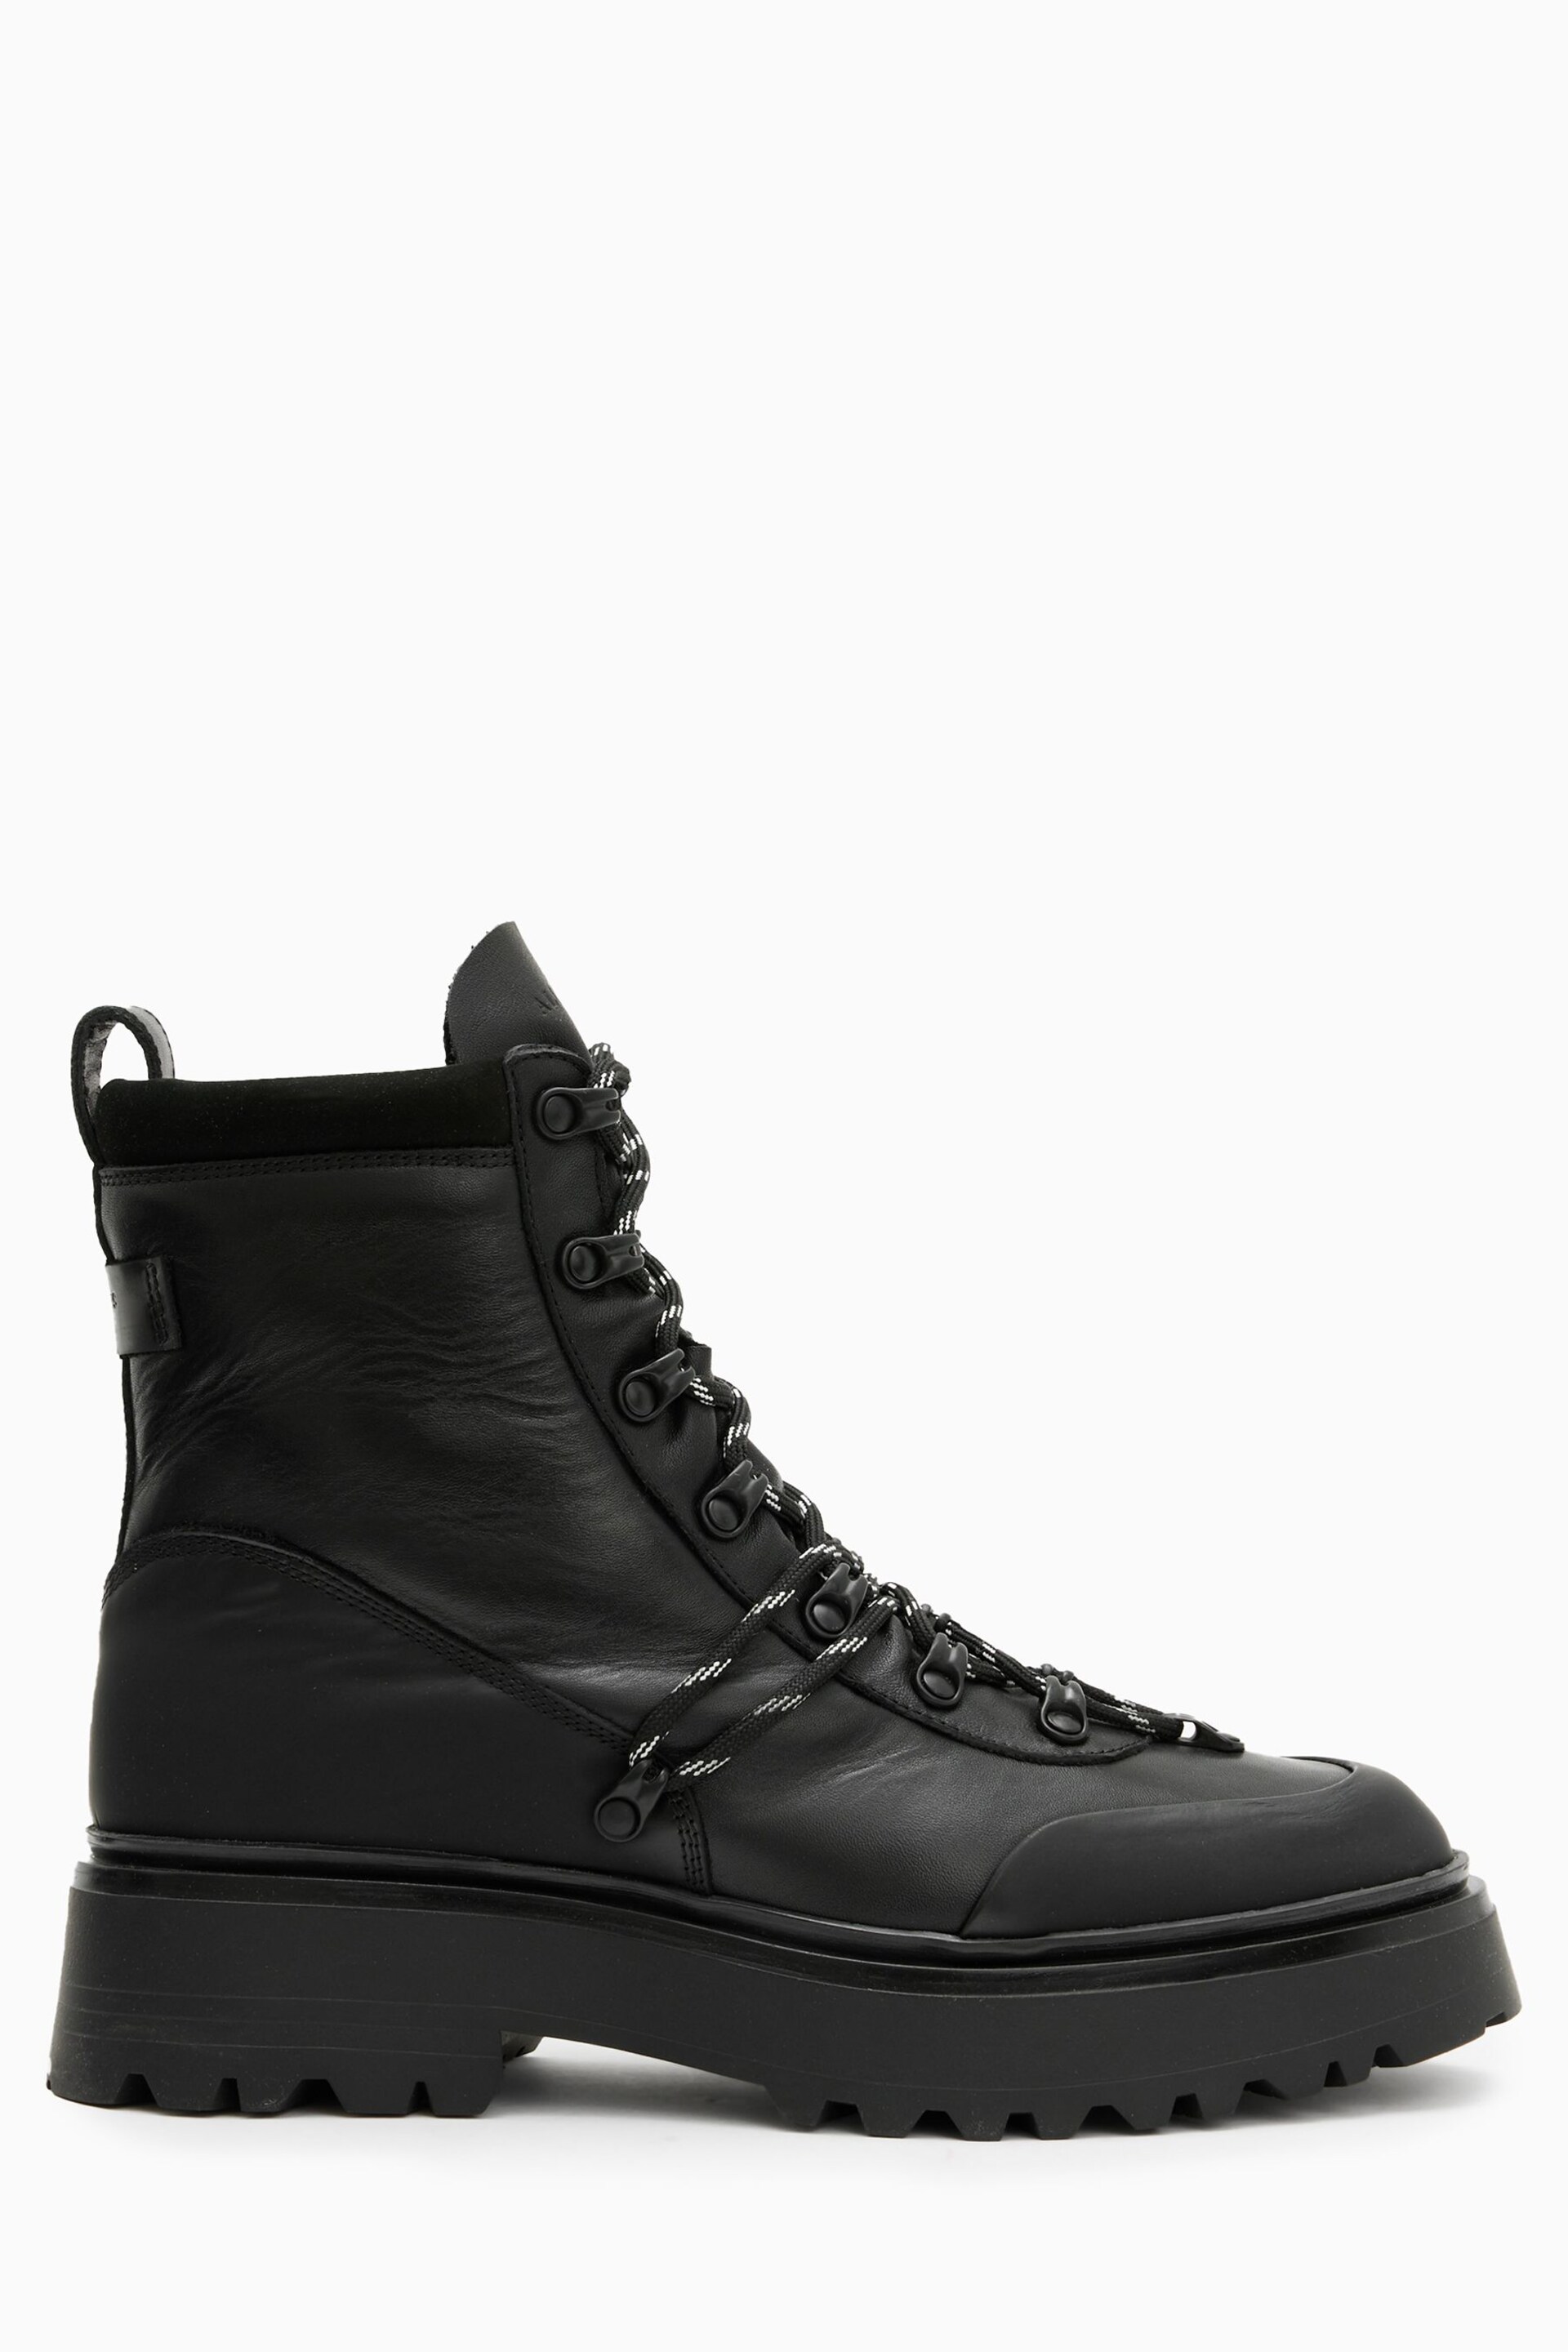 AllSaints Black Ker Boots - Image 1 of 5